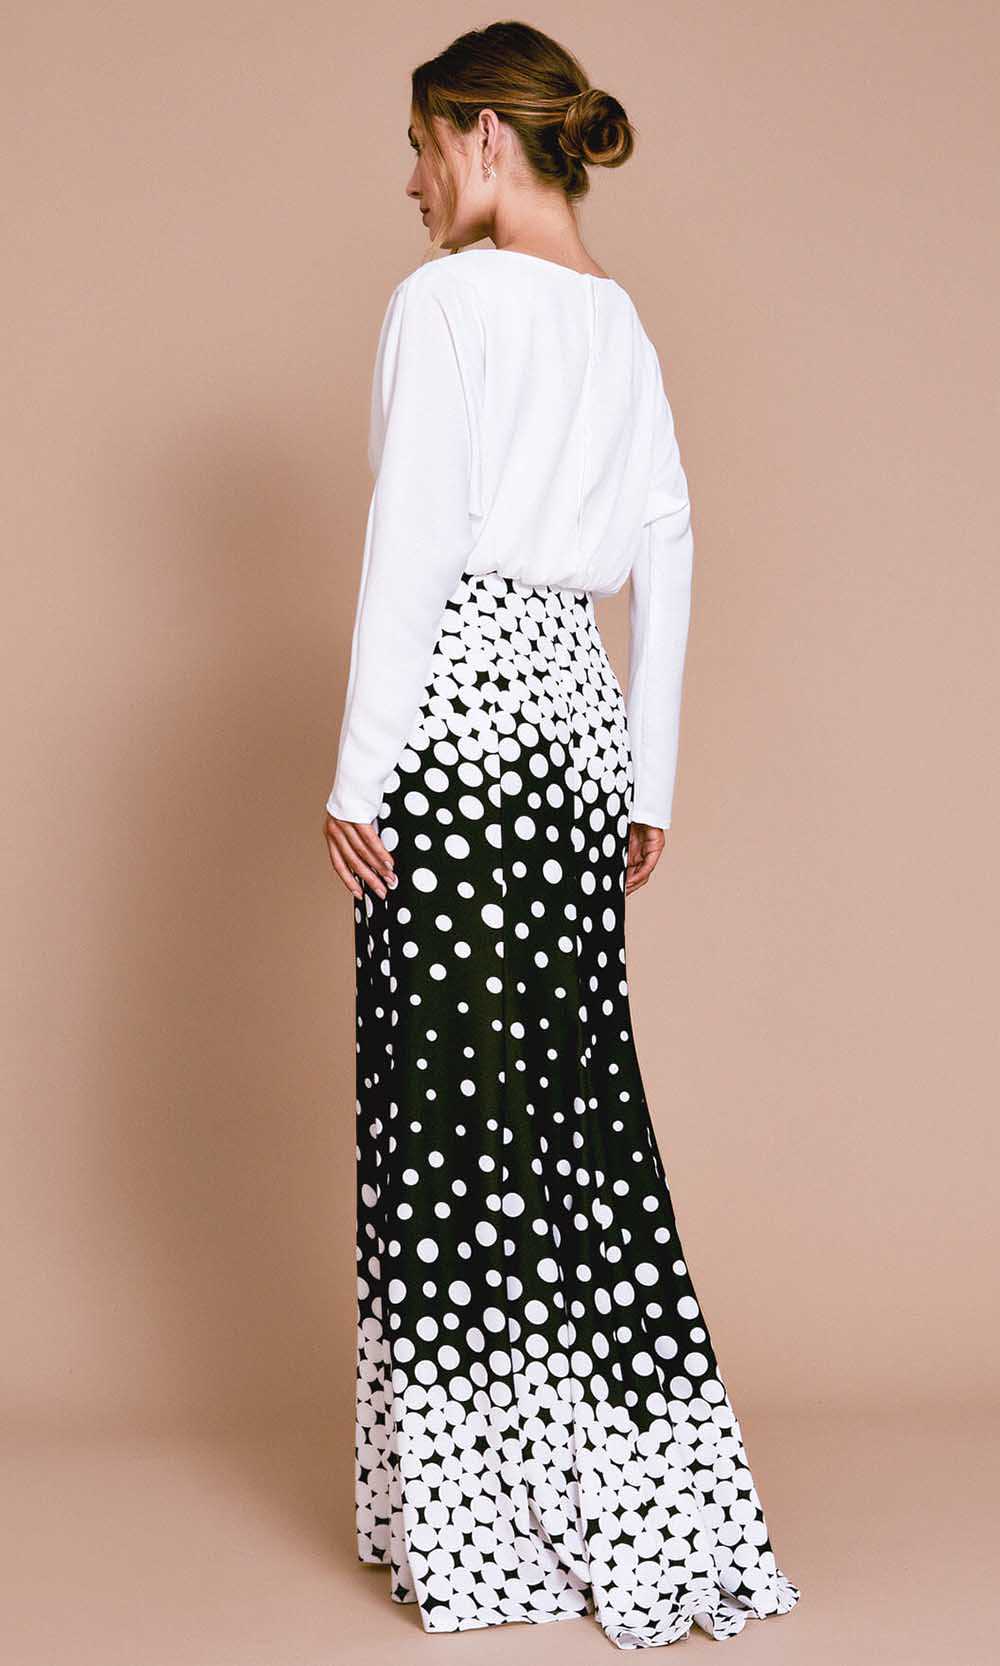 Tadashi Shoji, Tadashi Shoji - Elion Degreade Dot Gown BOP20249L - 1 pc White/Black In Size 8 Available